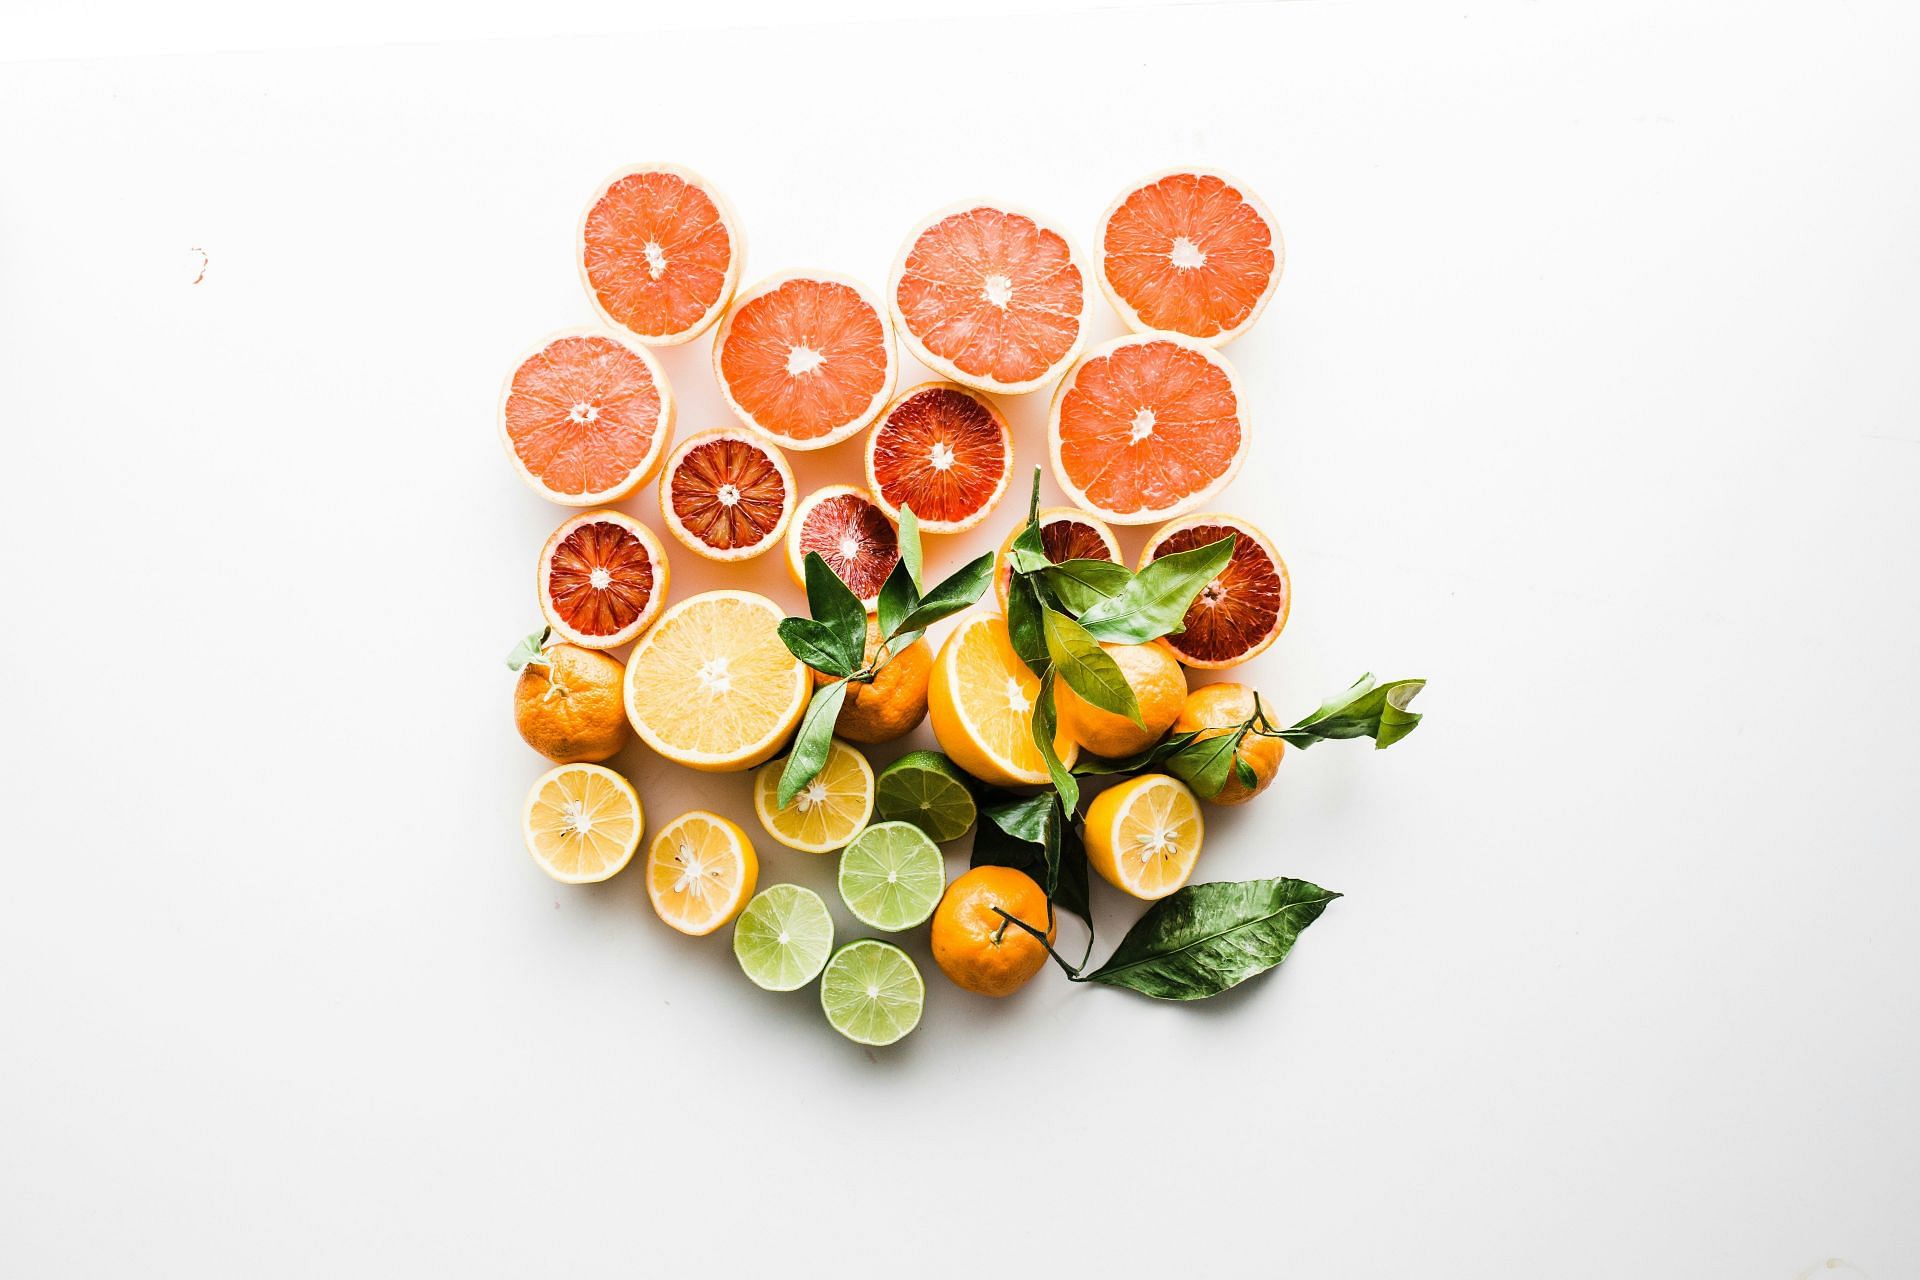 Citrus fruits are rich in Vitamin C (Image by Brooke Lark/Unsplash)